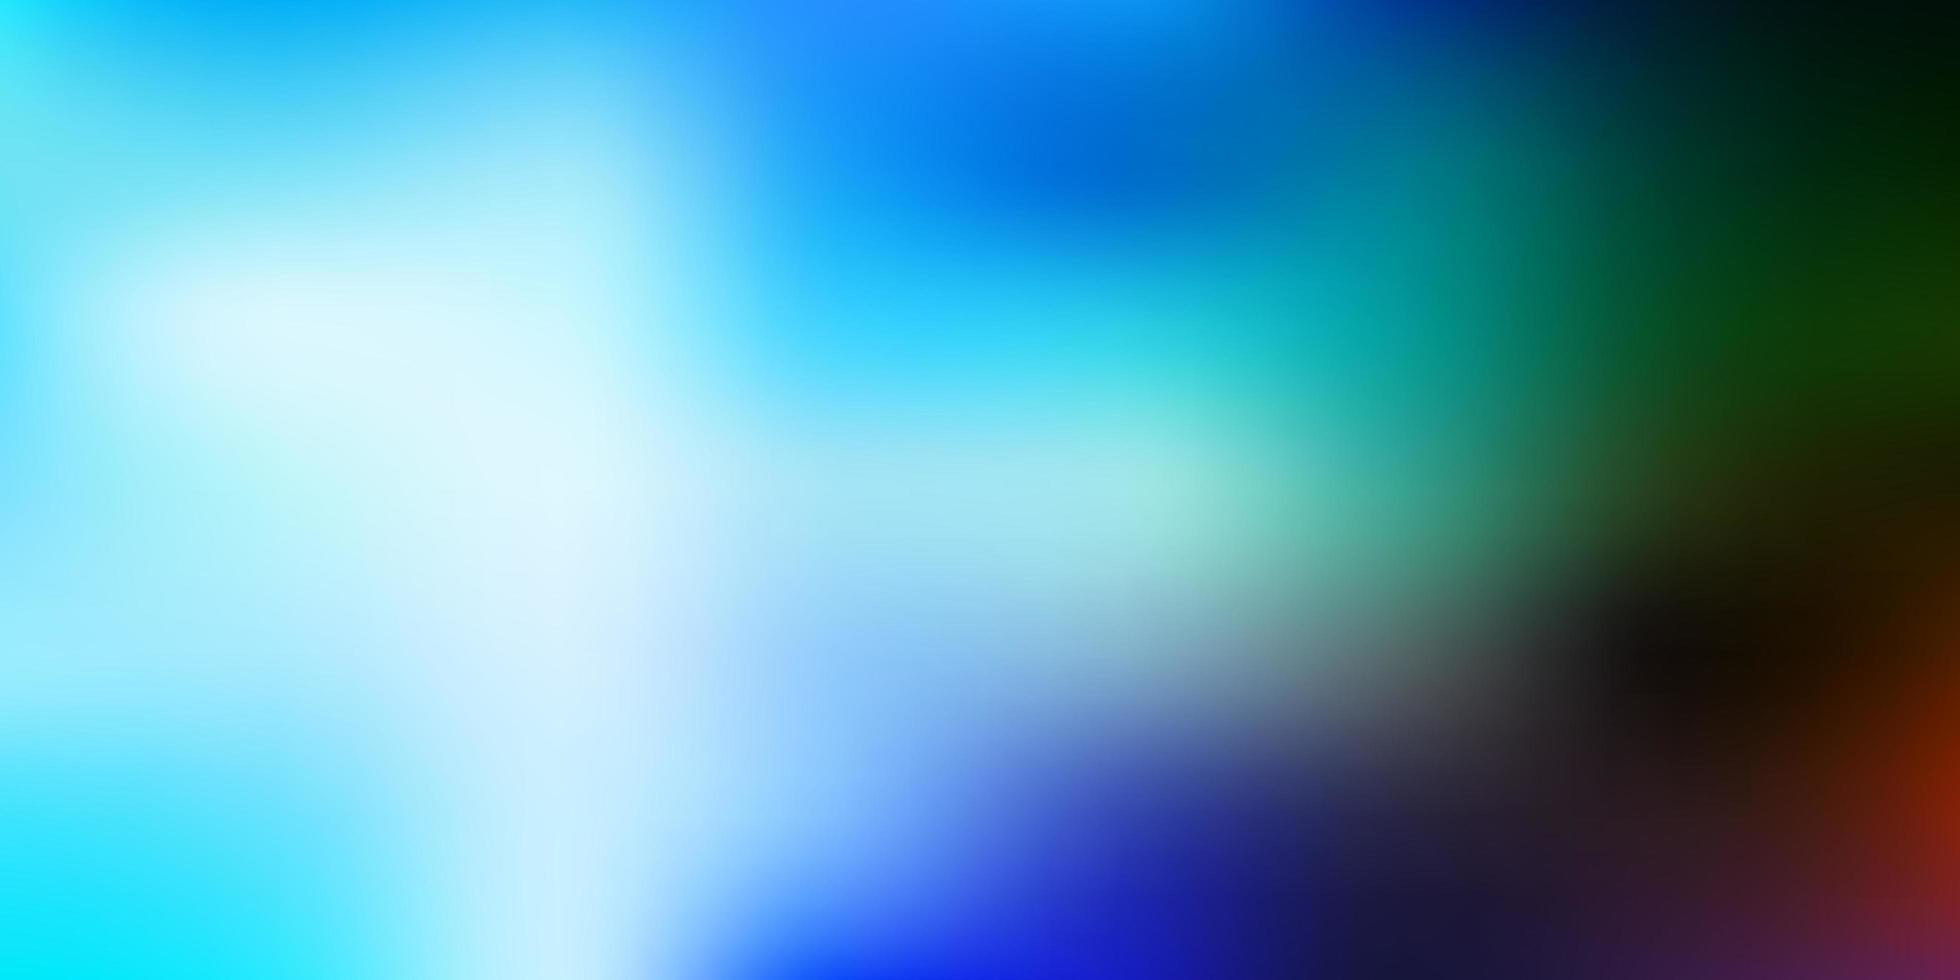 Light blue green vector abstract blur backdrop